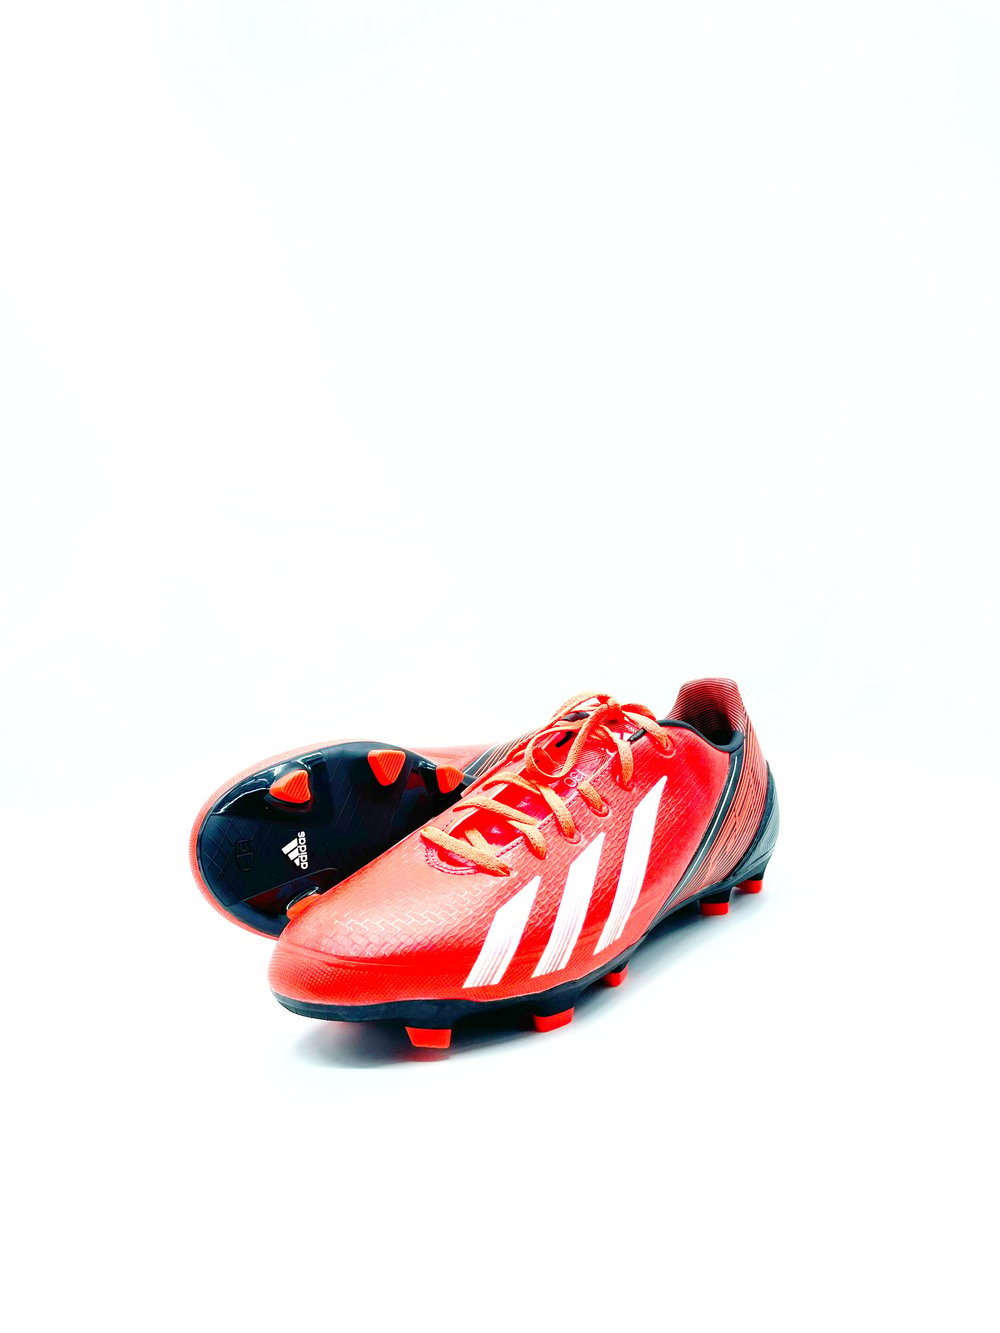 Tbtclassicfootballboots — Adidas F30 Adizero Red